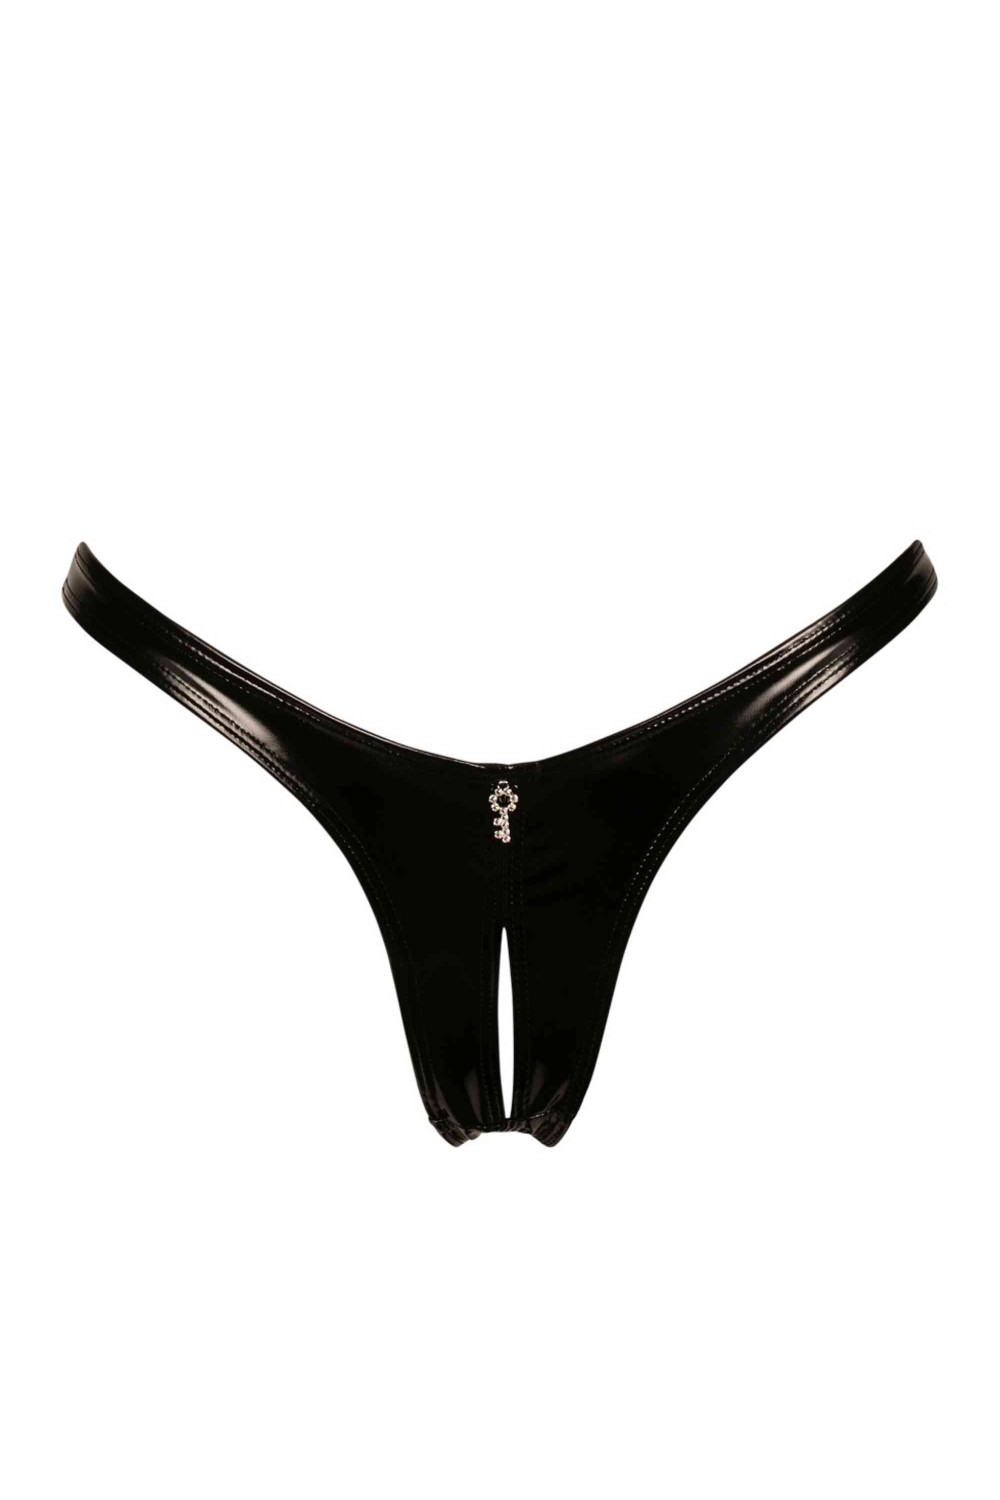 Sexy Lingerie Black PVC Shorts Cut Out Zipper Crotch Open Thong Hot Pants